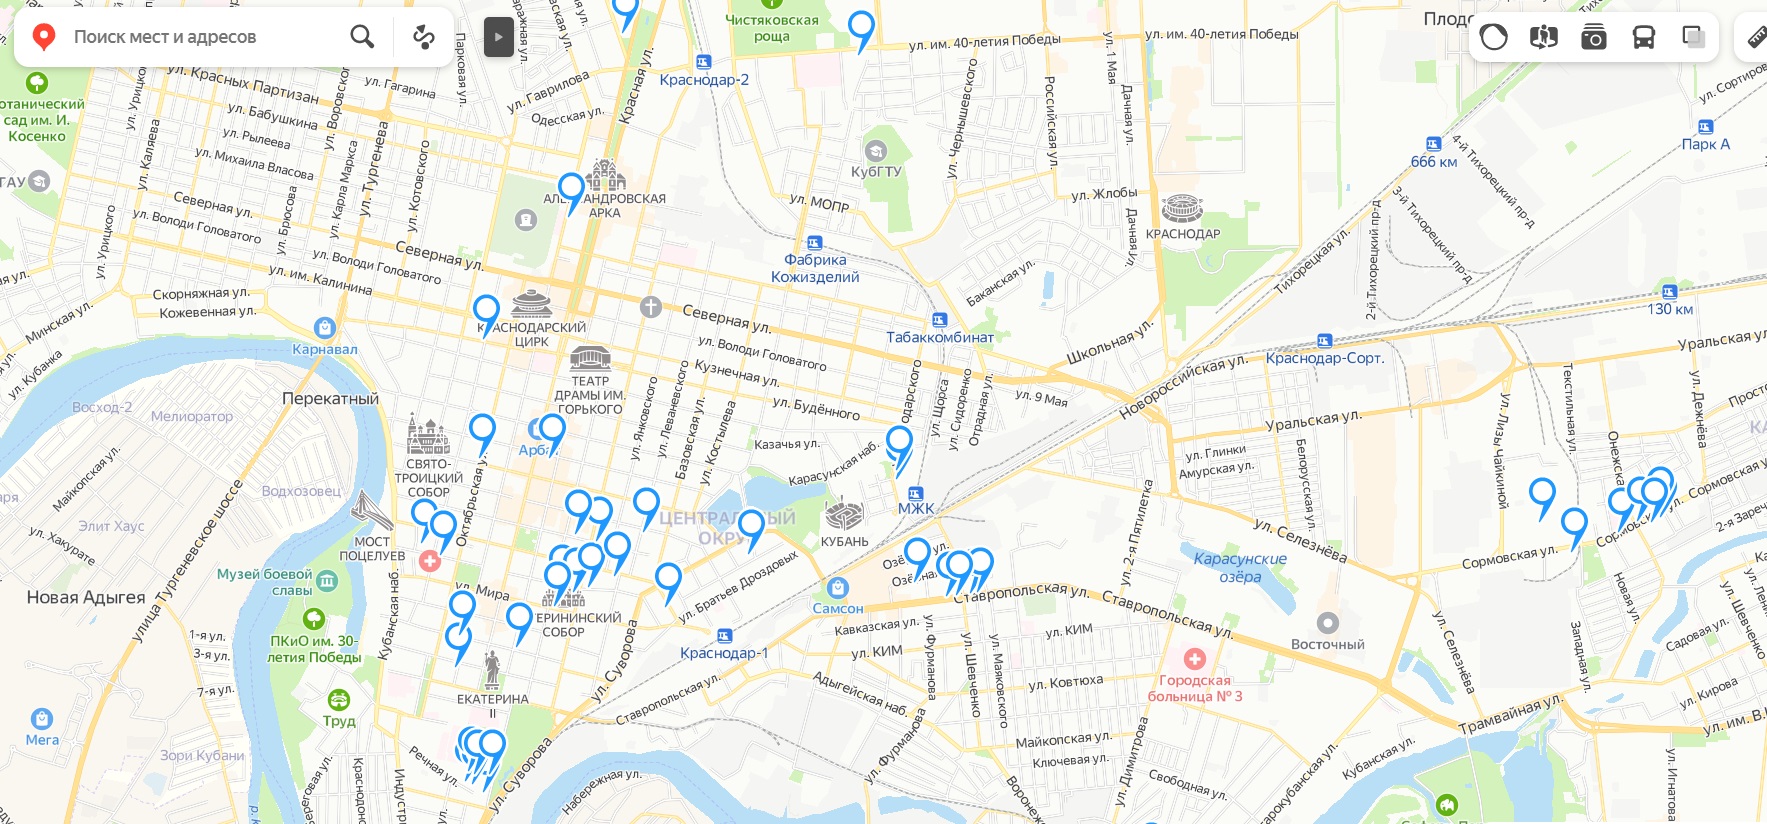 Интерактивная карта бомбоубежищ создана в Краснодаре